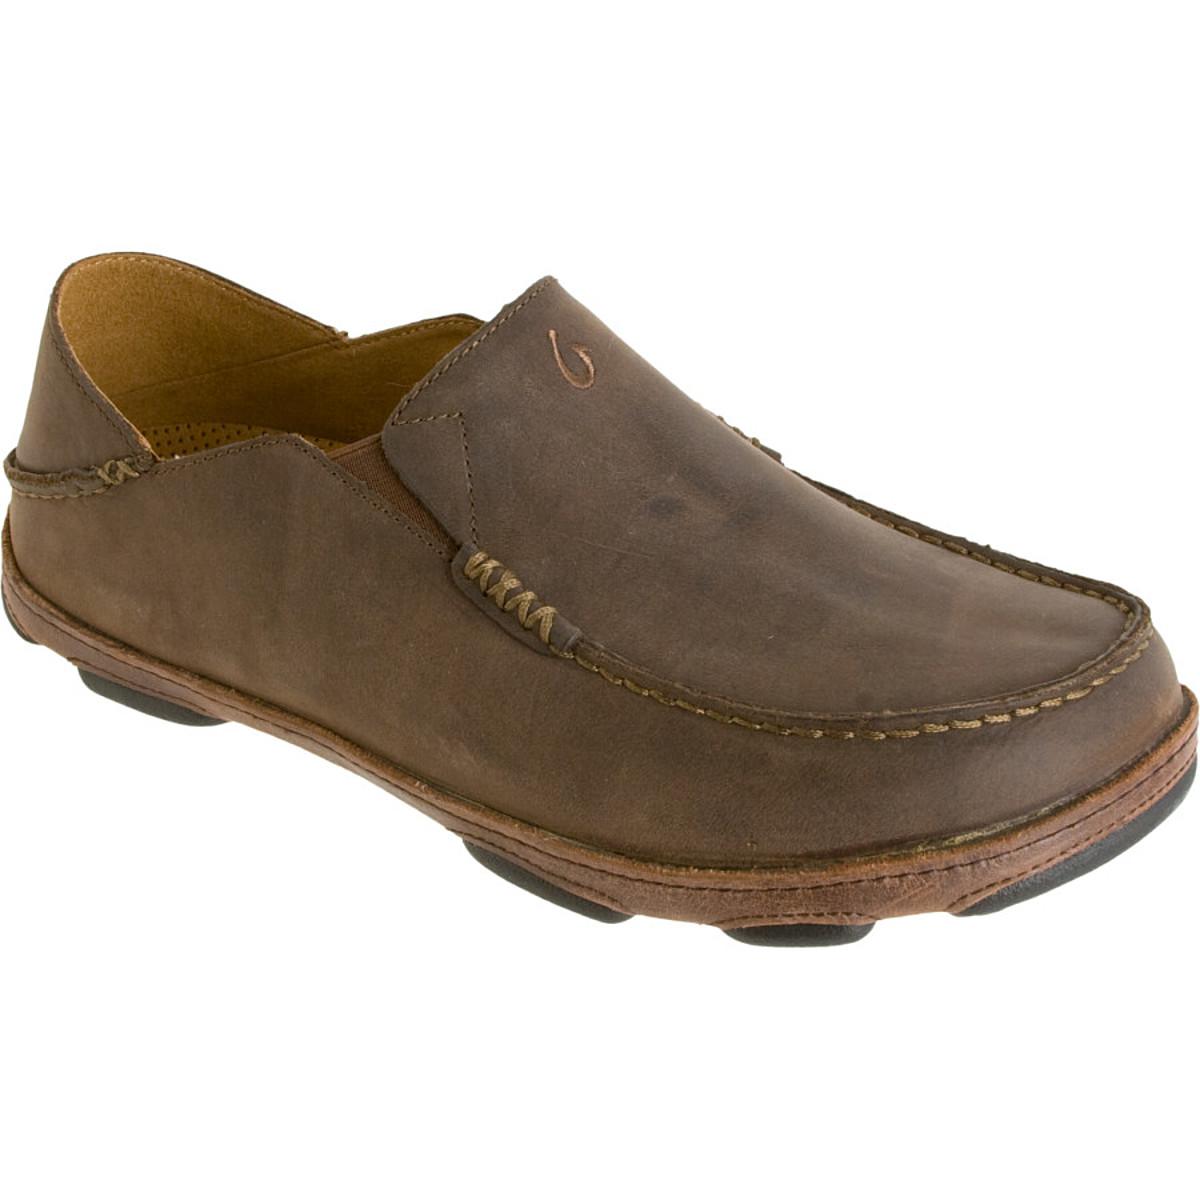 Olukai Leather Moloa Shoe in Brown for Men - Lyst